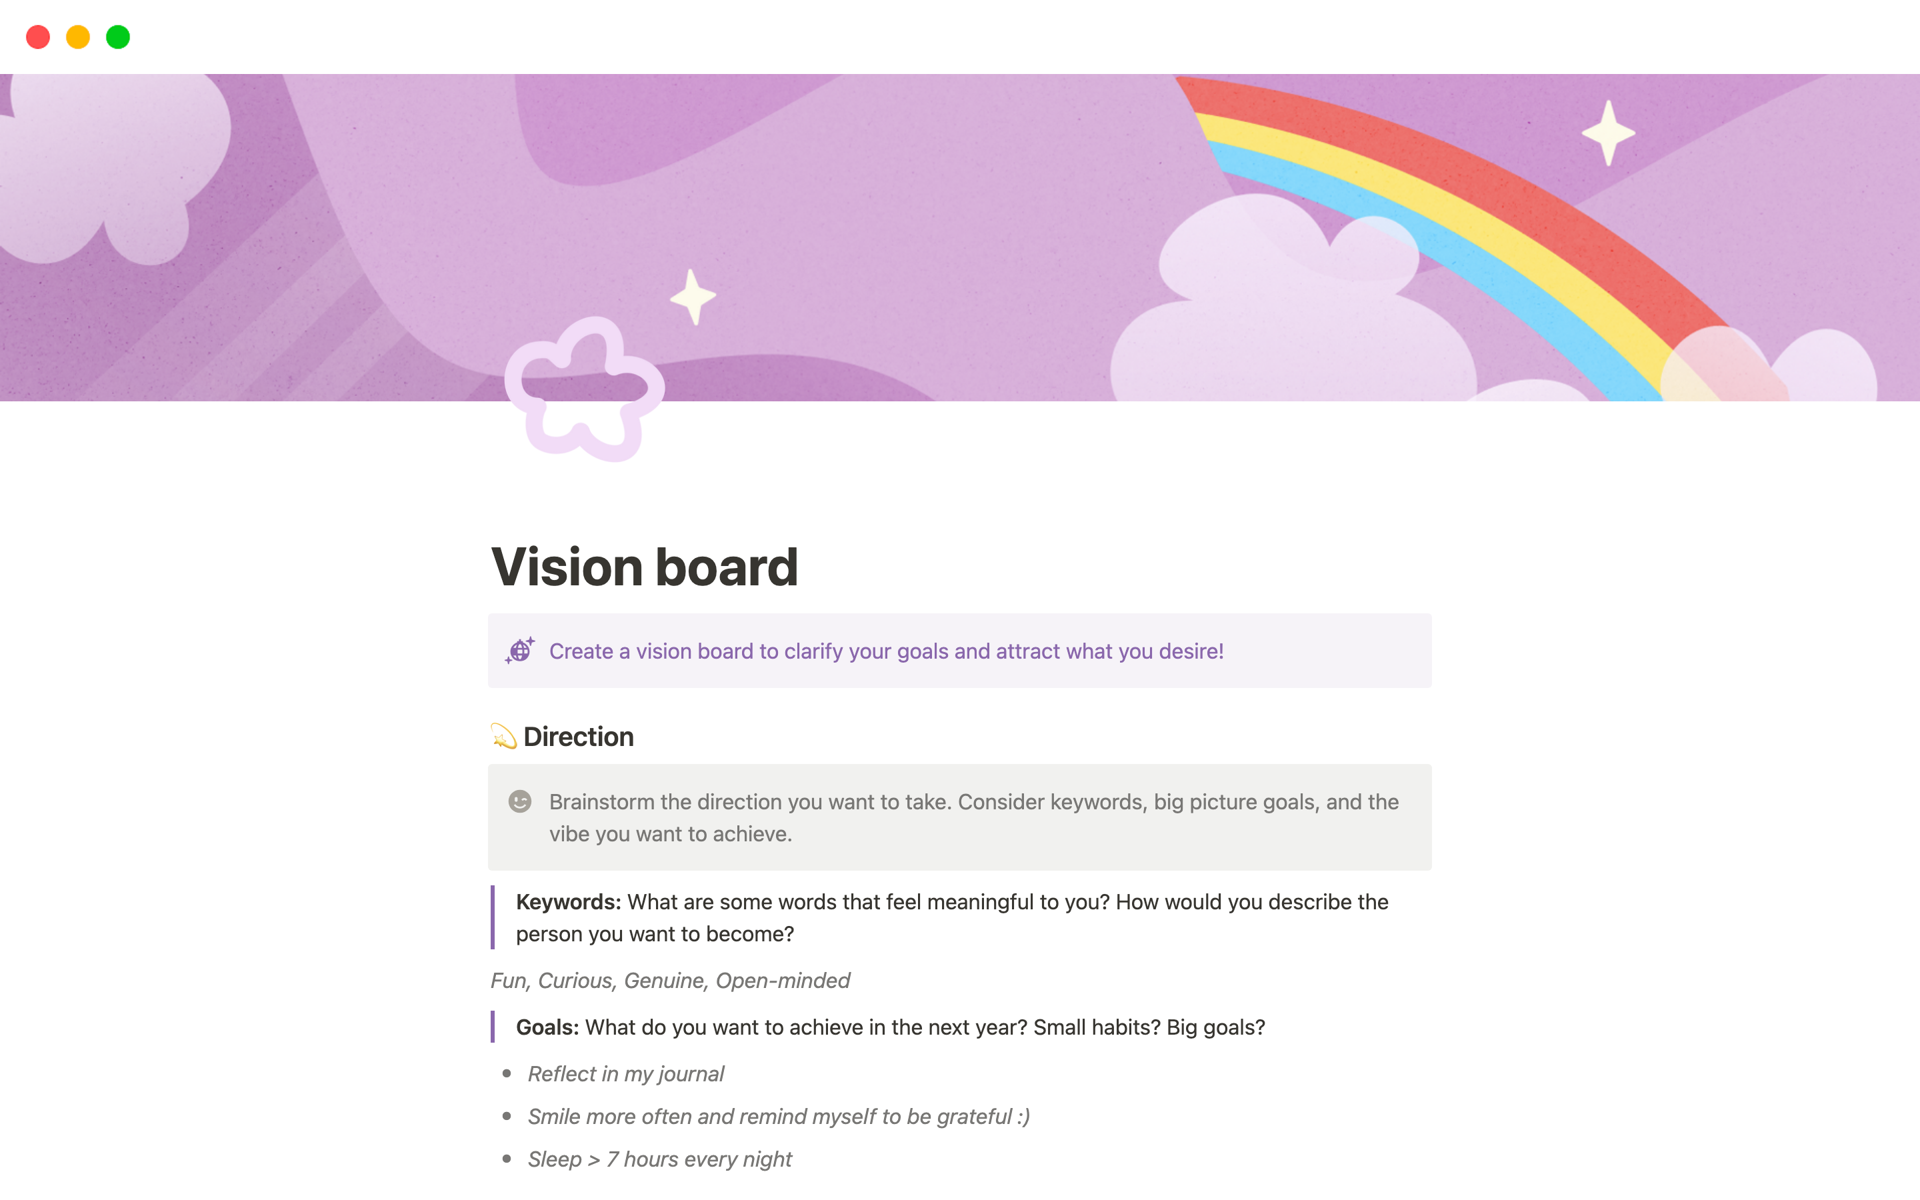 2024 Vision Board Kit & Life Planner